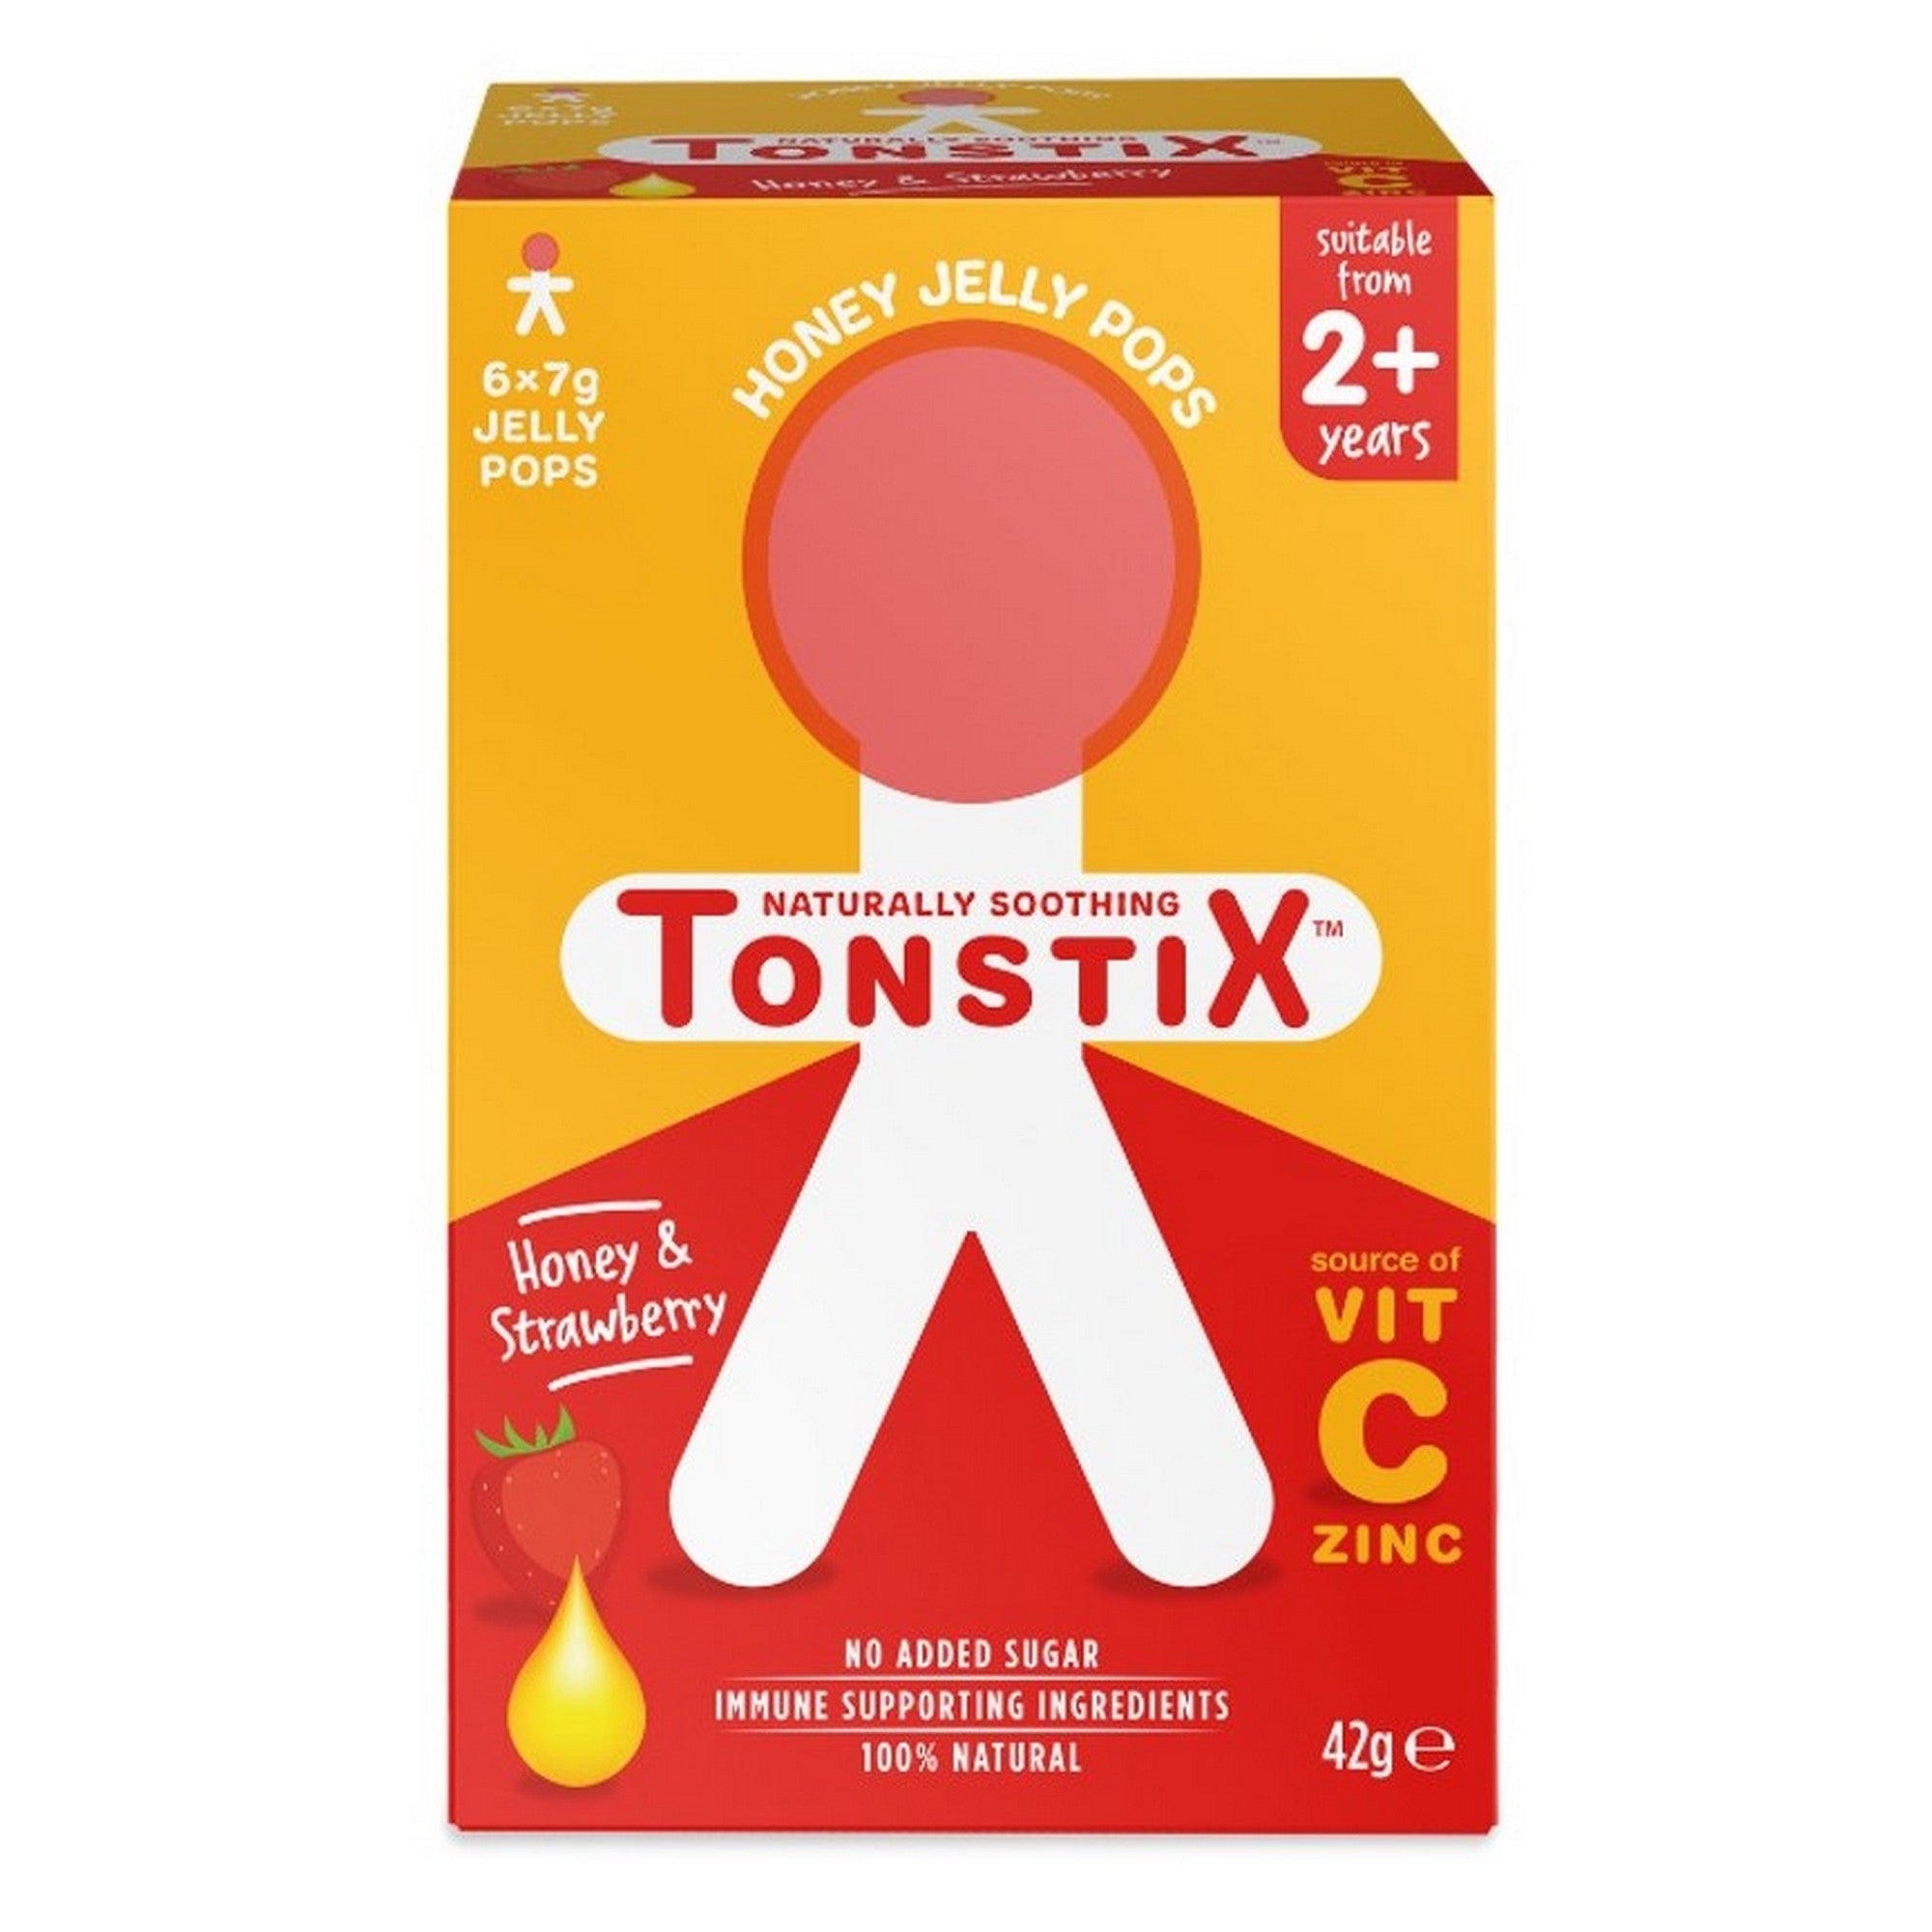 Tonstix Honey &amp; Strawberry - 6 Jelly Pops